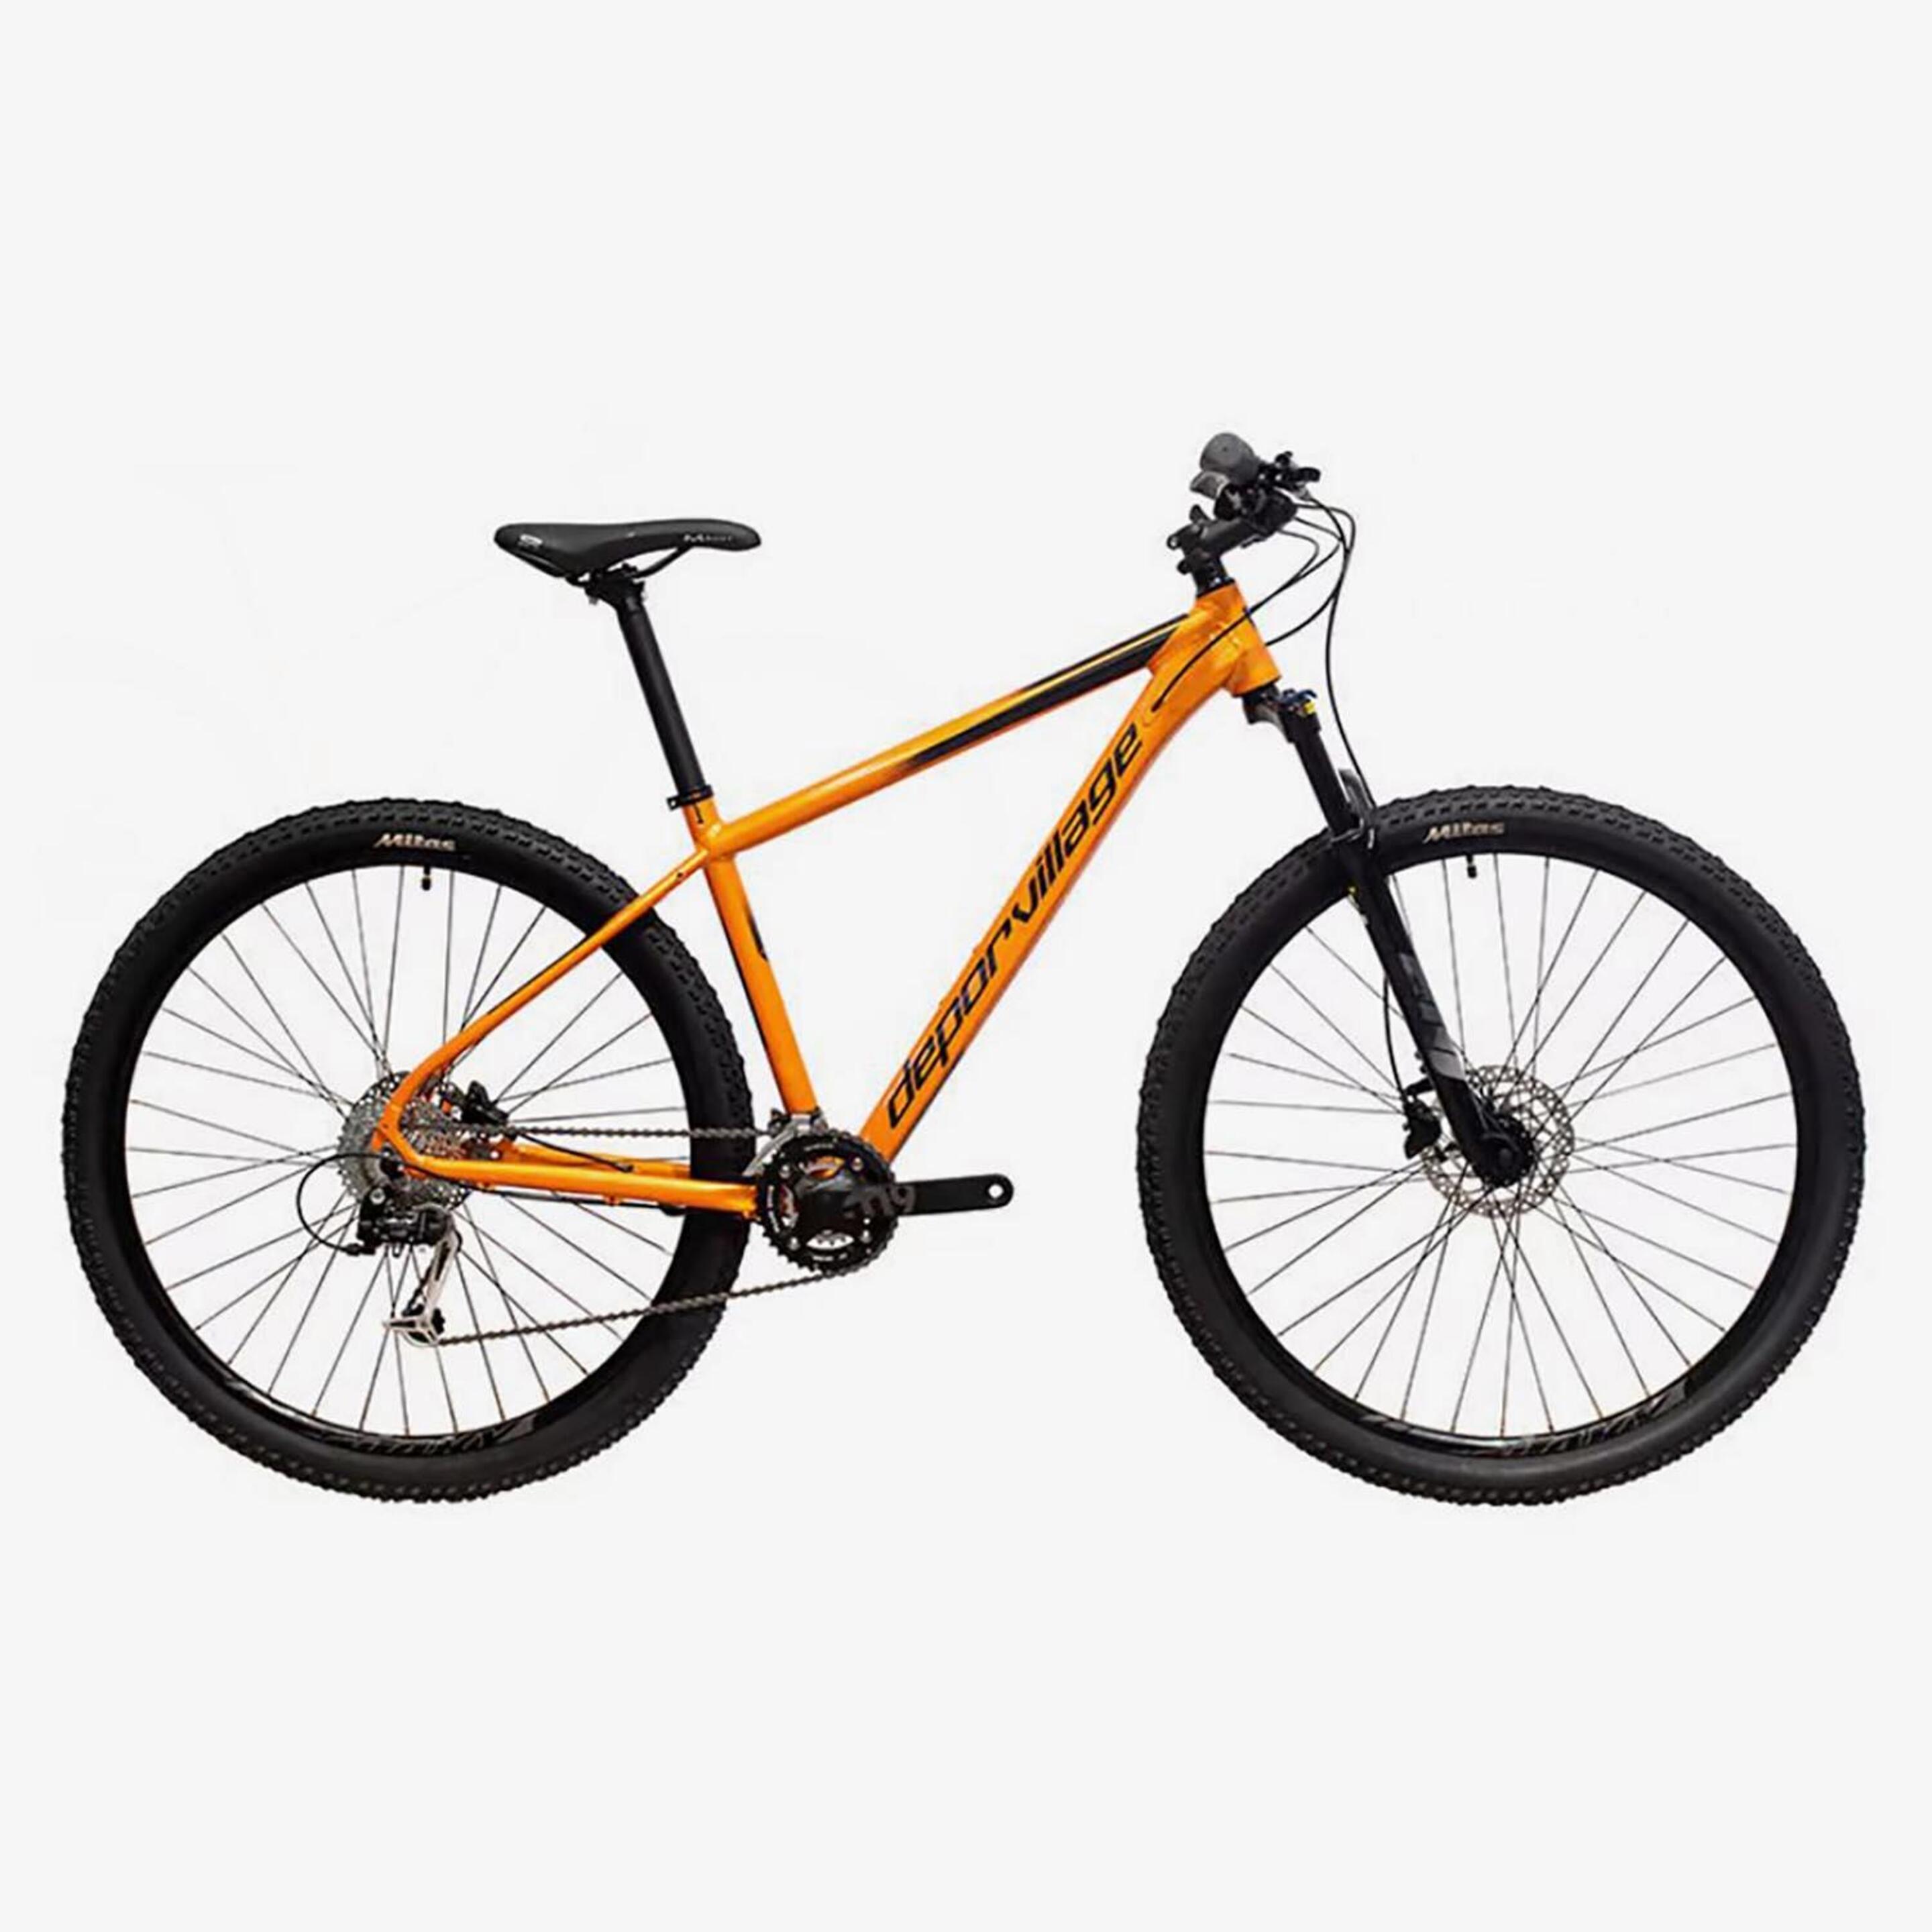 Deporvillage Pr500 29" - naranja - Bicicleta Montaña